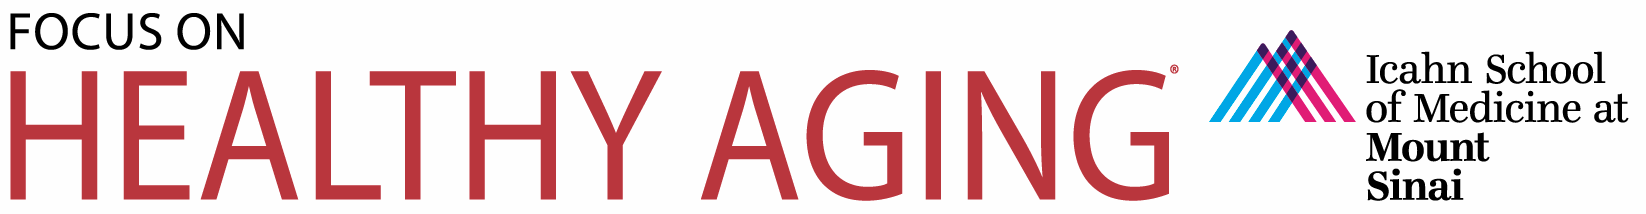 Icahn School of Medicine at Mount Sinai's Focus on Healthy Aging (FHA) logo